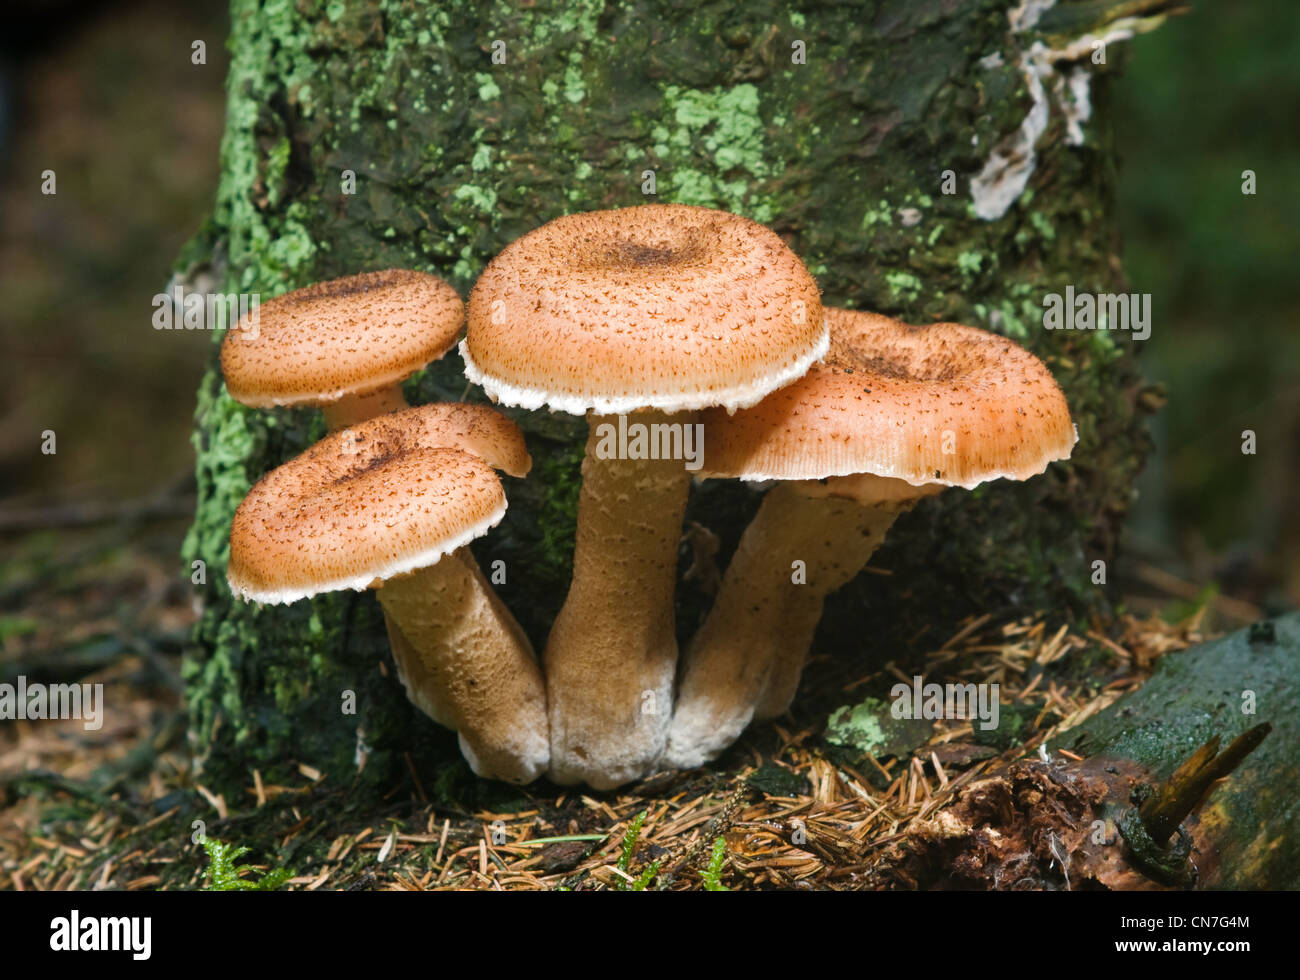 Four Freckled Dapperlings (Lepiota aspera), probably poisonous mushrooms. Stock Photo